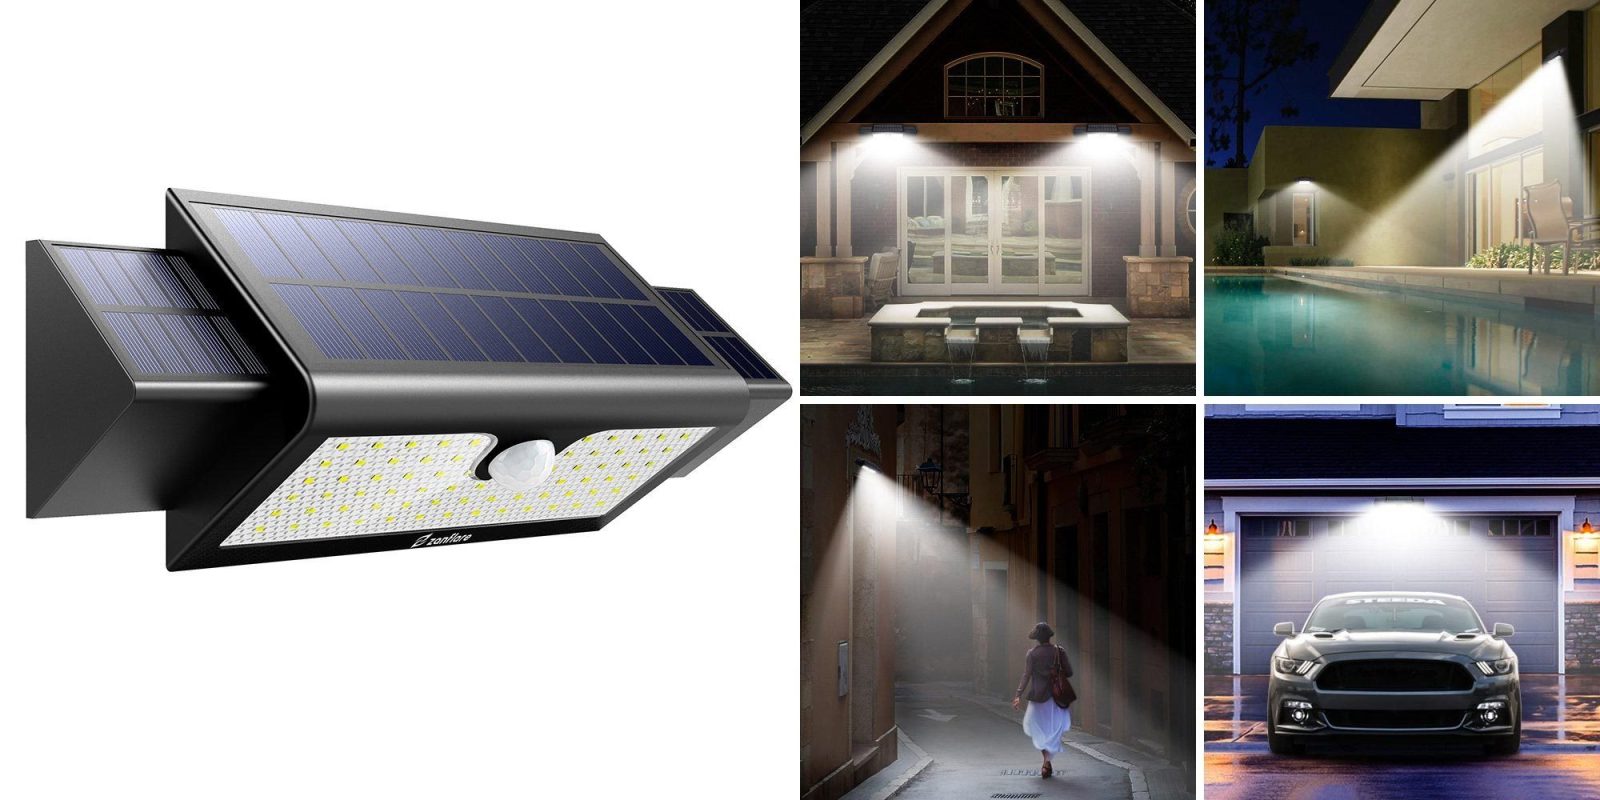 https://electrek.co/wp-content/uploads/sites/3/2018/05/zanflare-motion-sensing-solar-powered-outdoor-led-light.jpg?quality=82&strip=all&w=1600